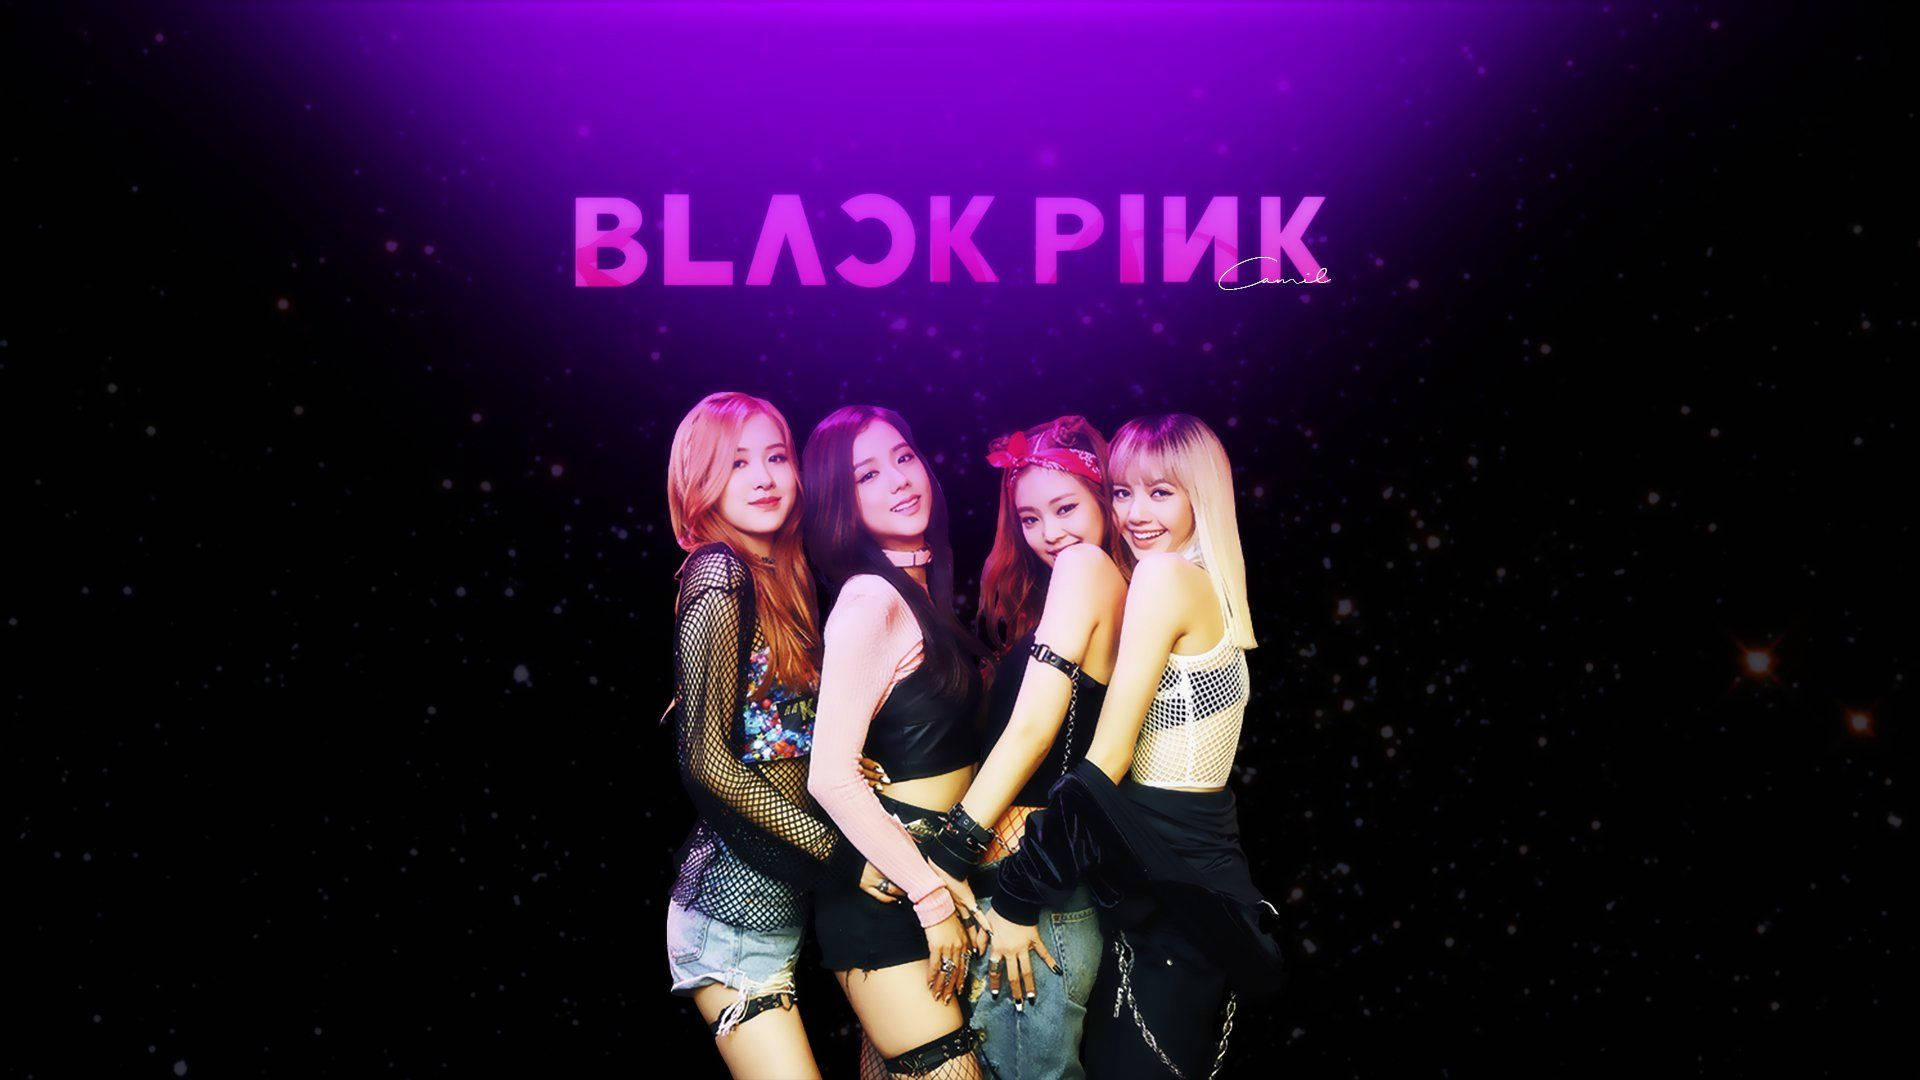 Blackpink - BLACKPINK's Galaxy Theme Wallpaper